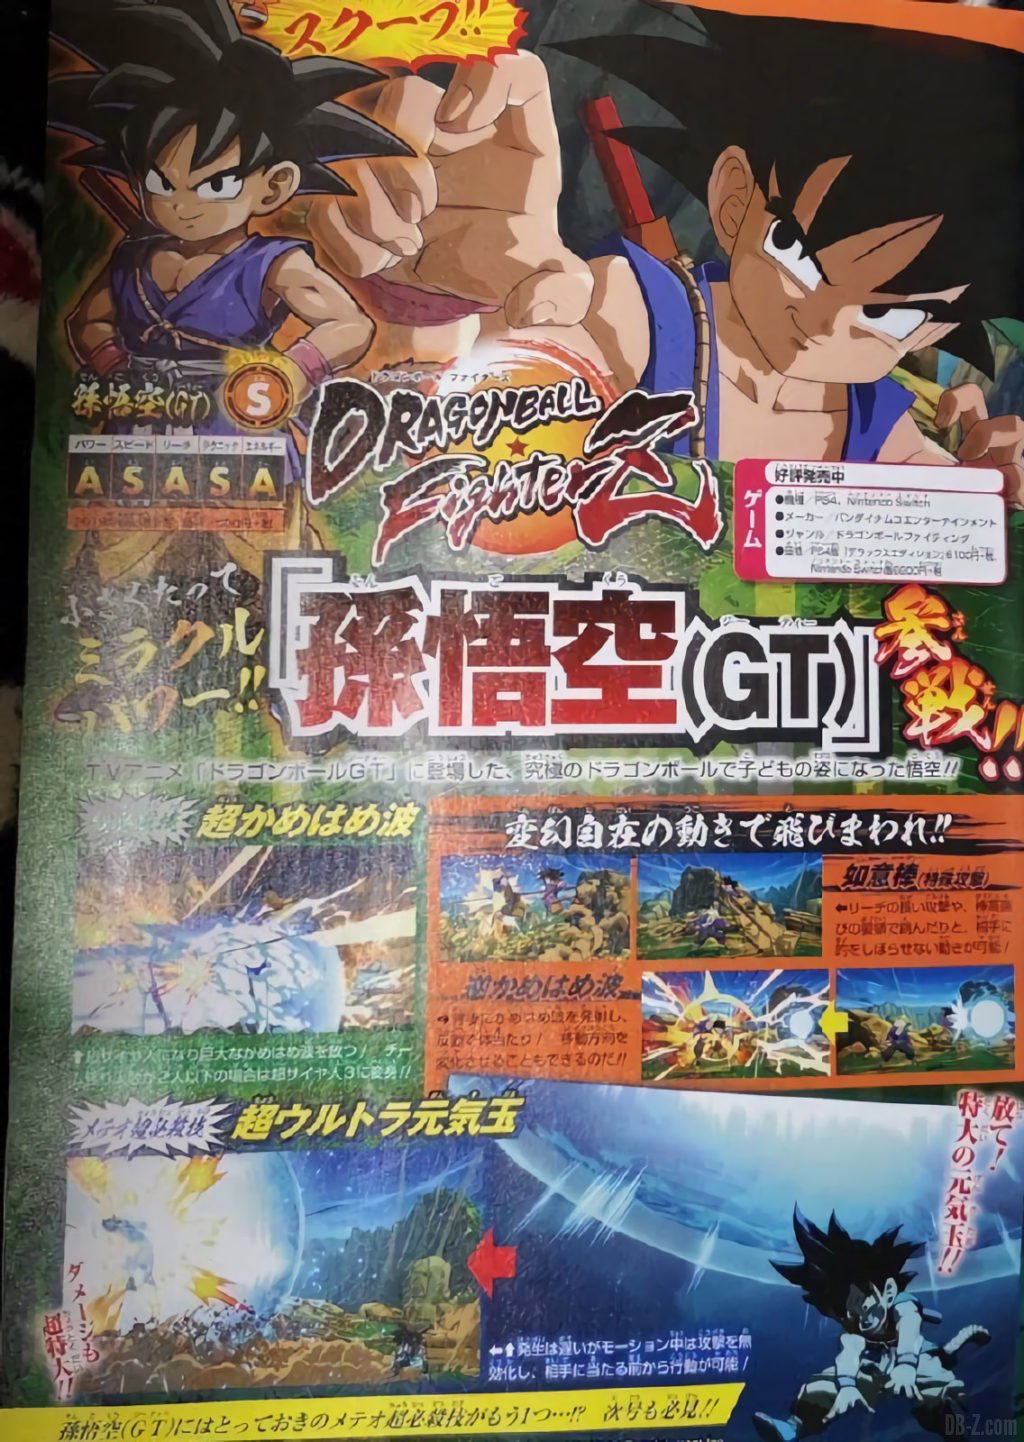 Goku GT Dragon Ball FighterZ